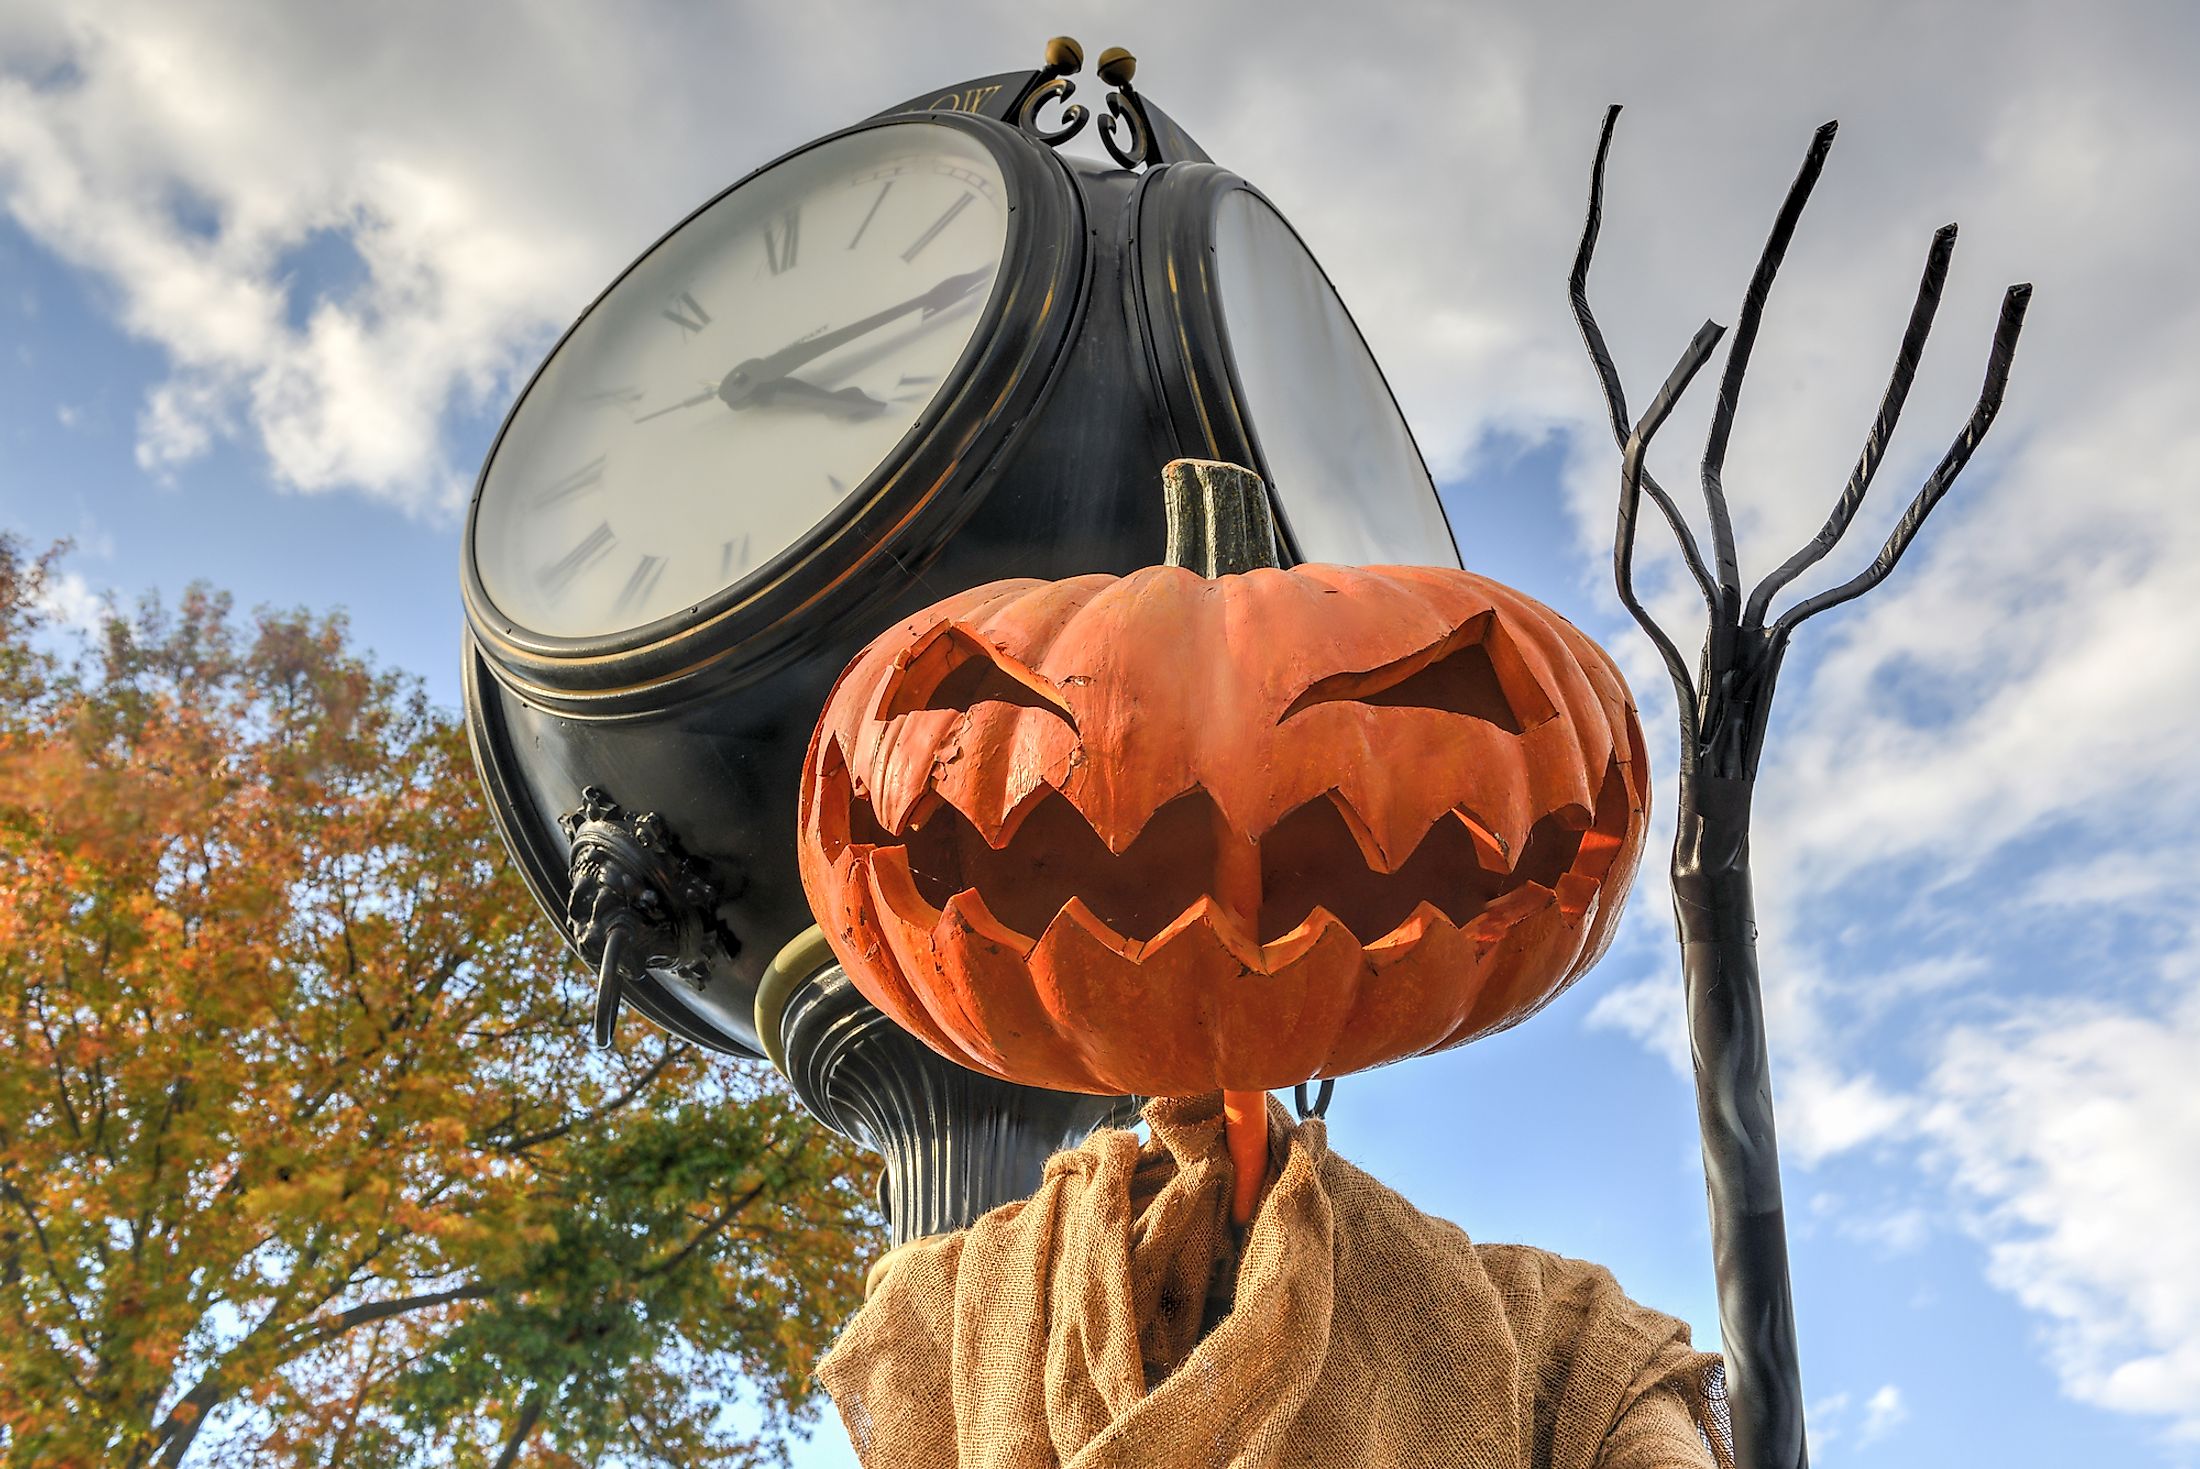 Jack O'Lantern from Sleep Hollow, New York during Halloween.  